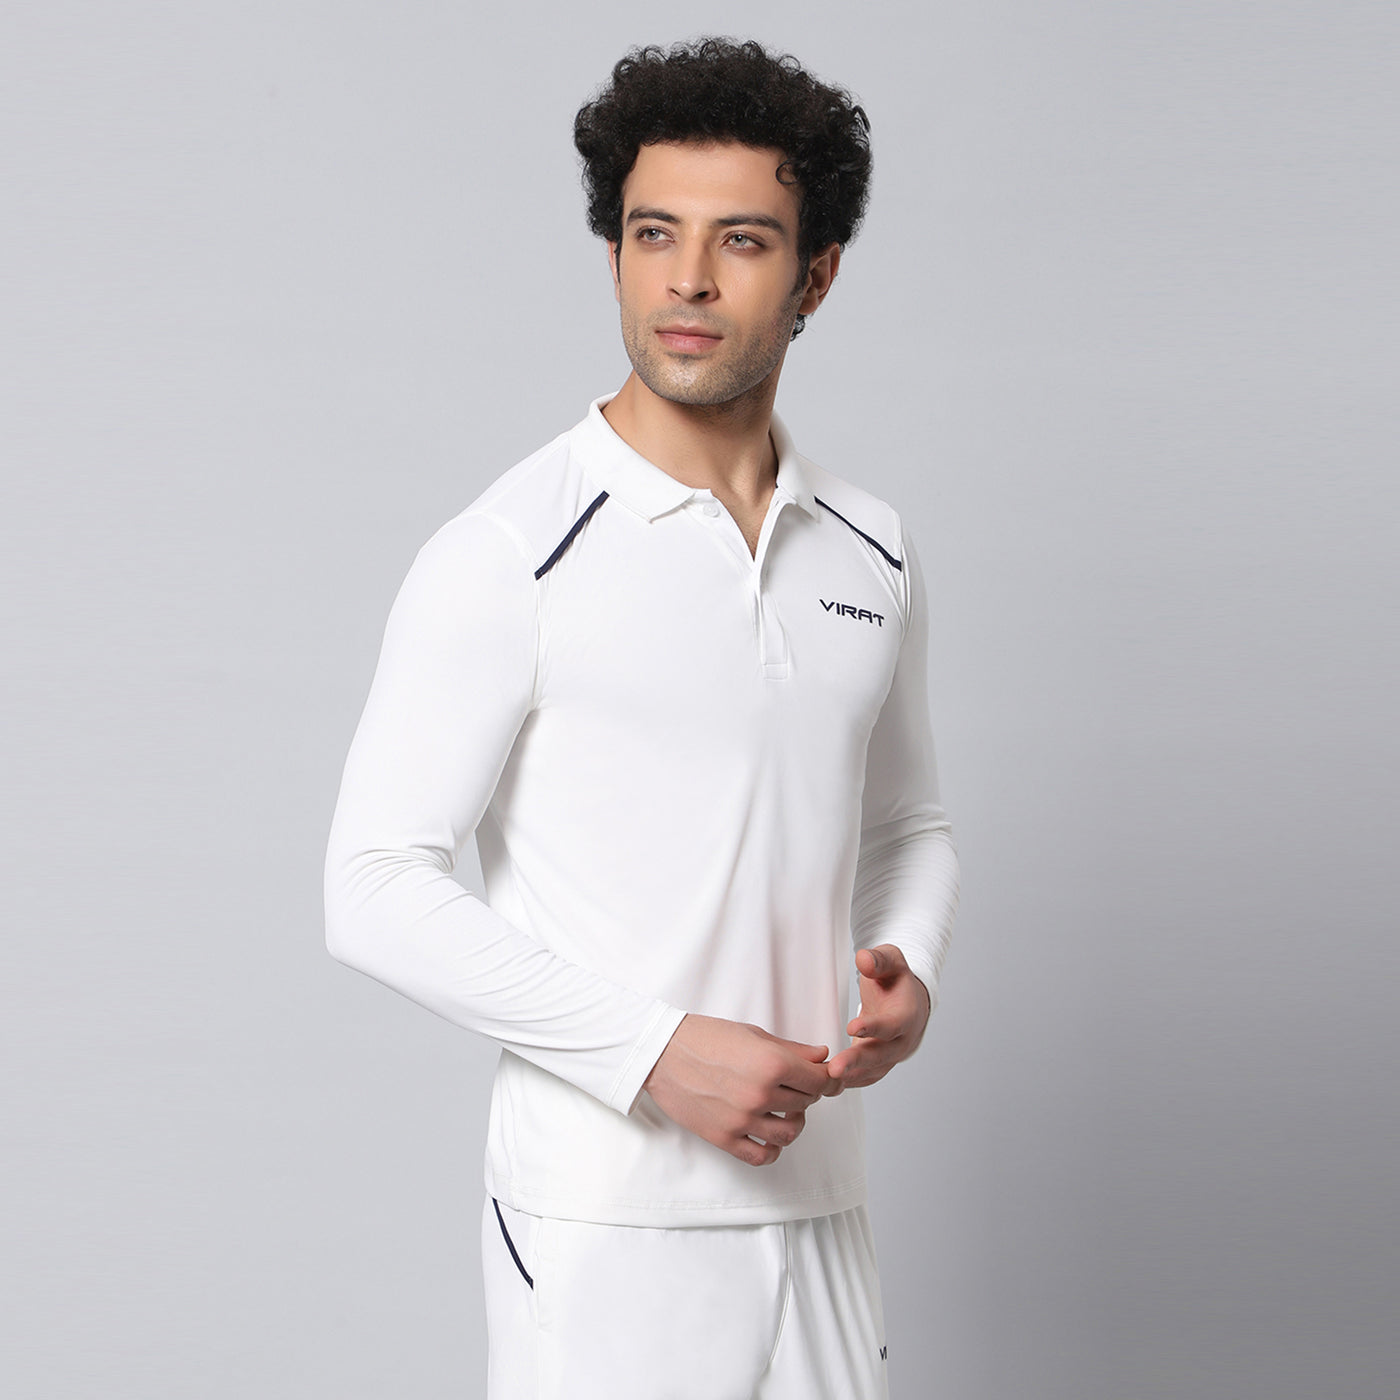 Virat Cricket Whites Classic Full Sleeve T-shirt